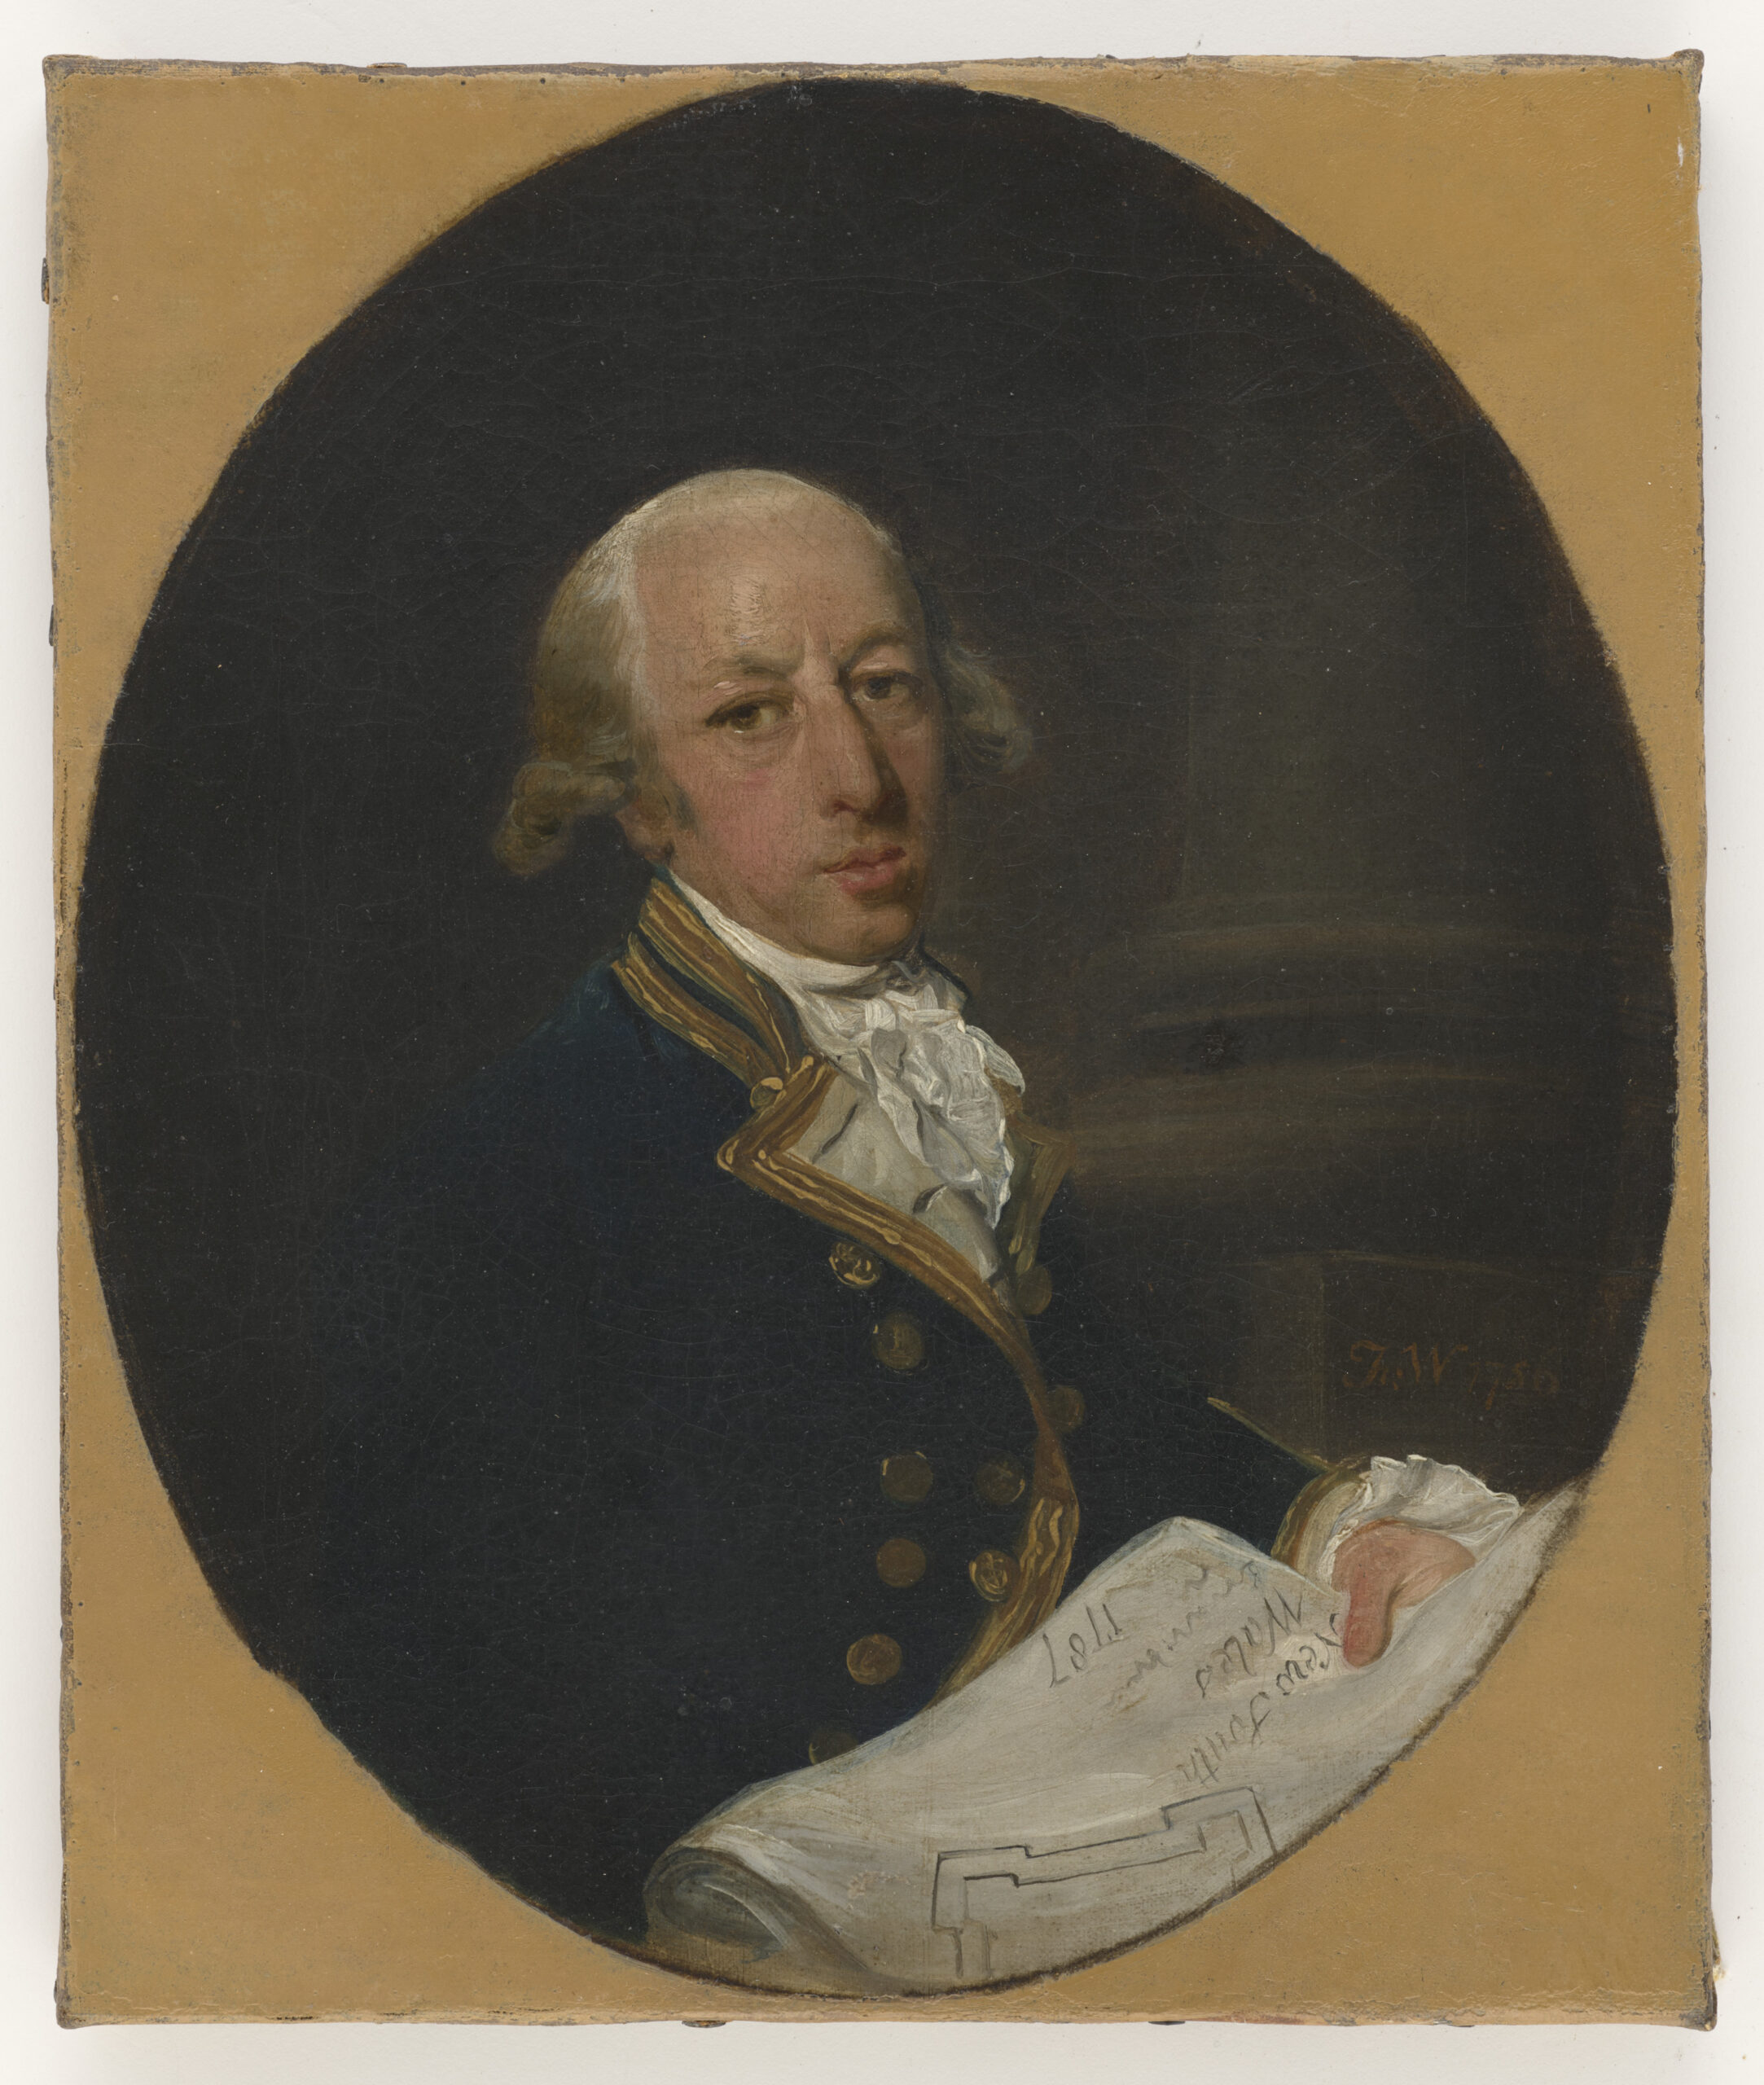 Admiral Arthur Phillip, R.N. Citizen of London